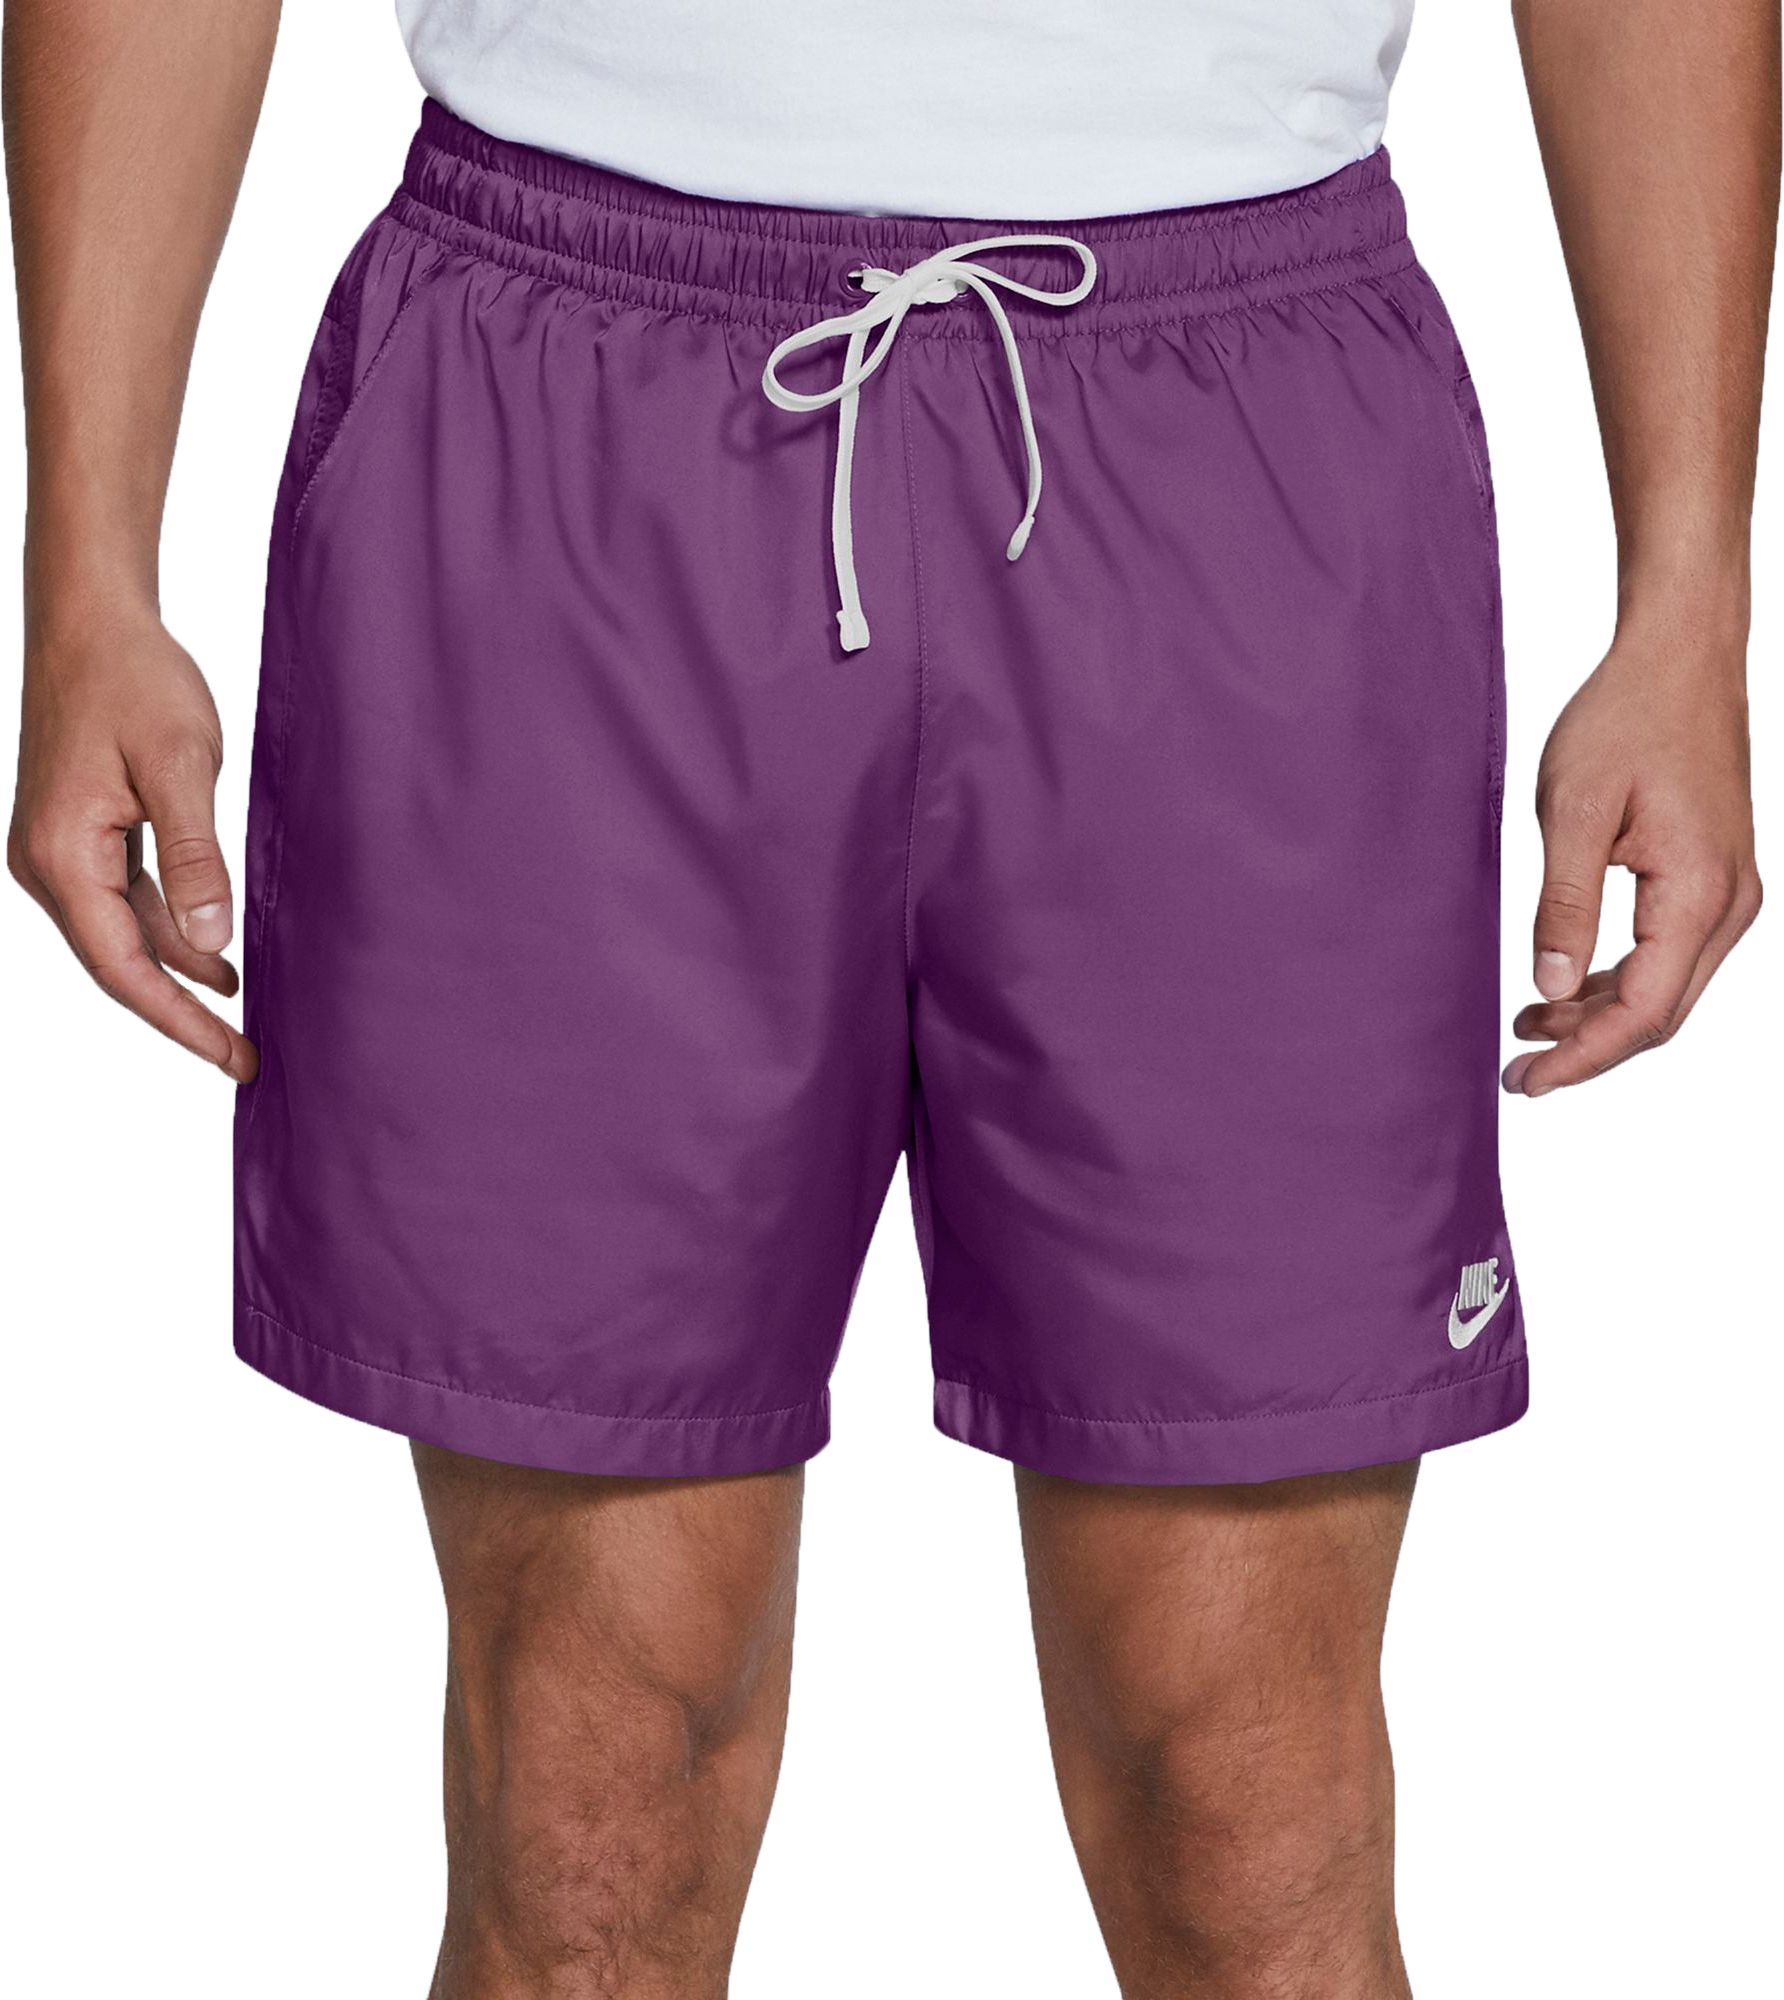 nike men's 6 inch shorts